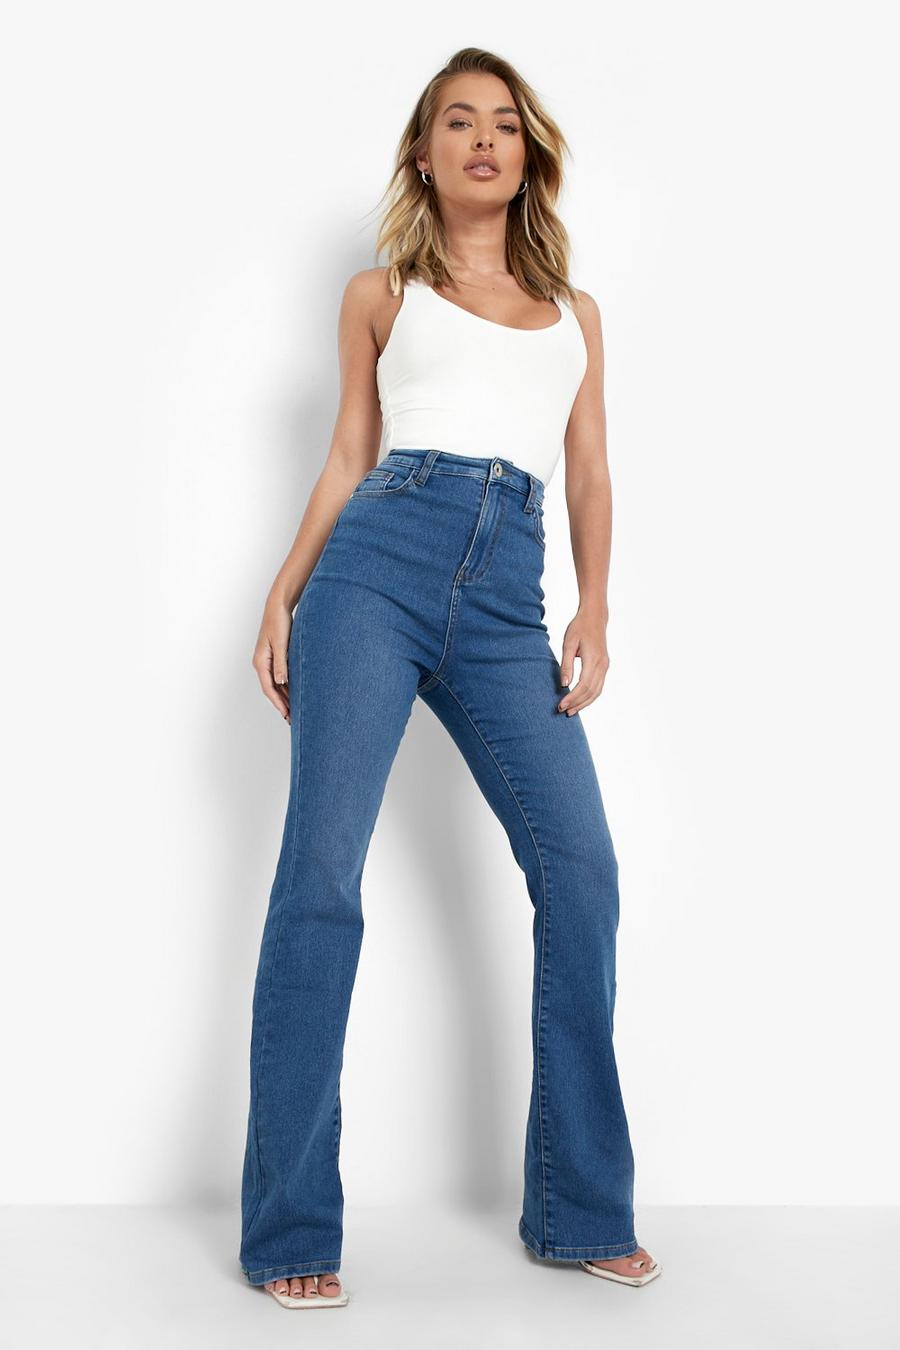 https://media.boohoo.com/i/boohoo/fzz37302_mid%20blue_xl/female-mid%20blue-high-waisted-bum-lifting-flared-jeans/?w=900&qlt=default&fmt.jp2.qlt=70&fmt=auto&sm=fit